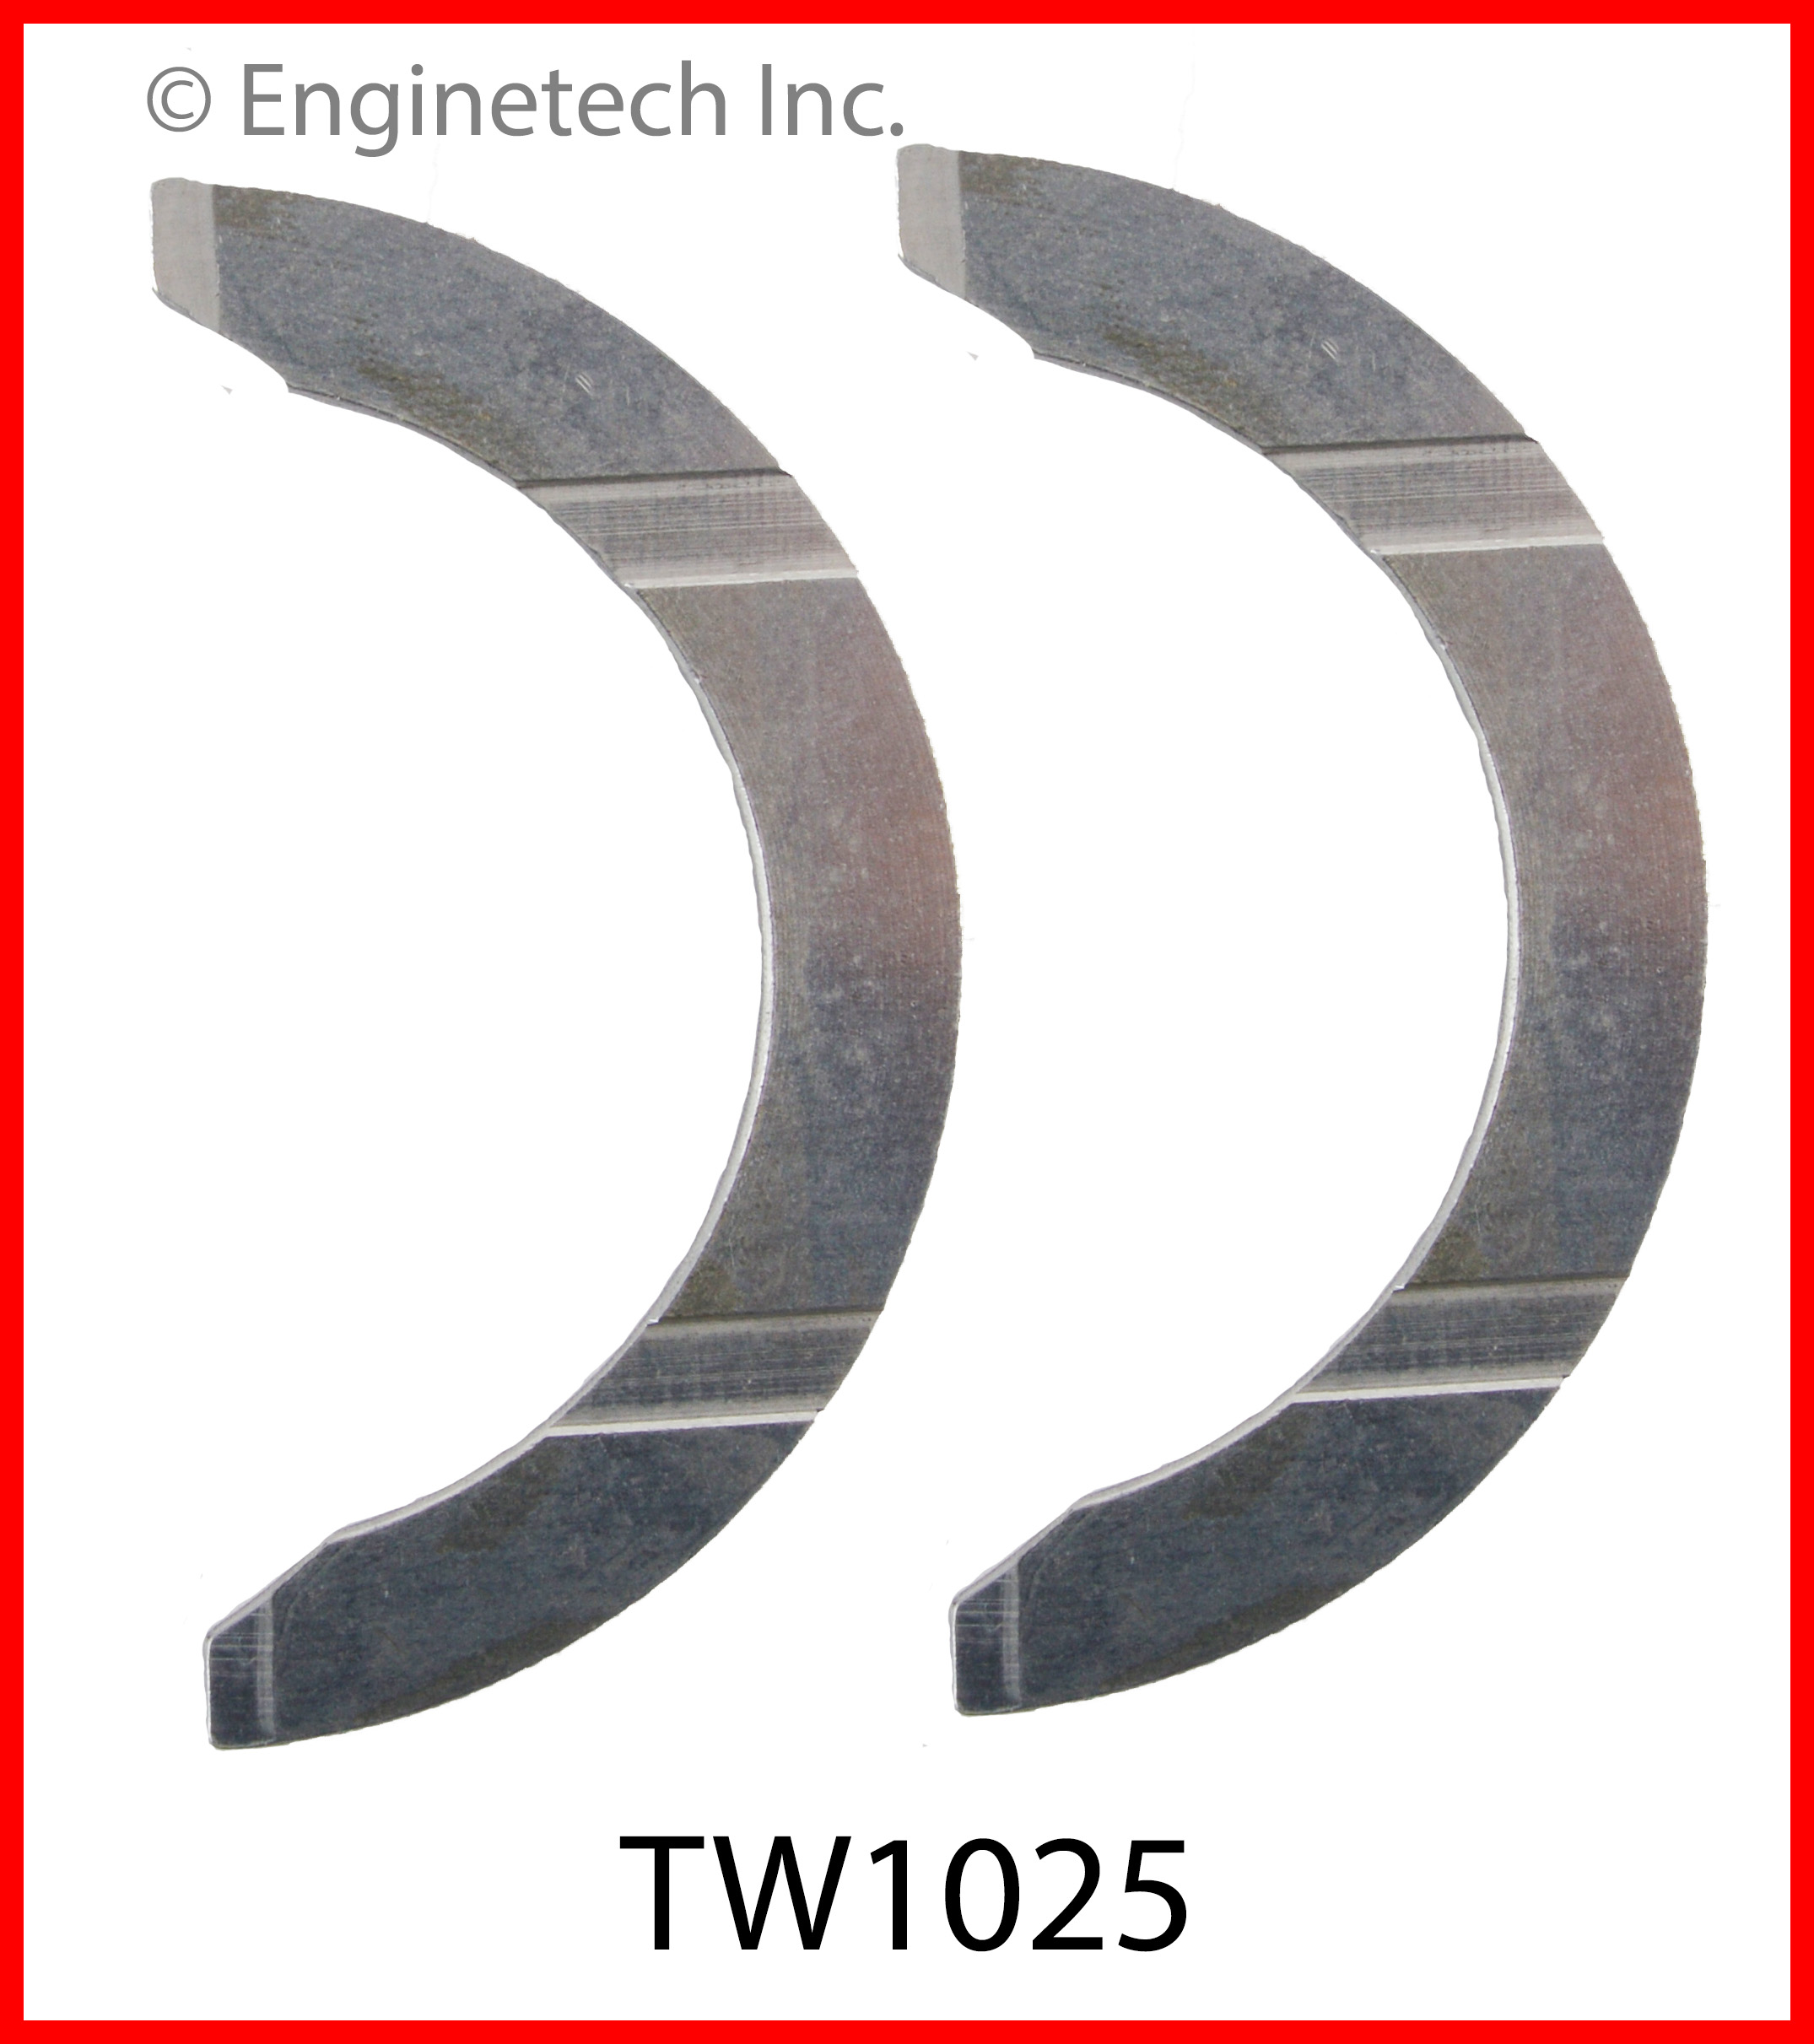 TW1025 Thrust Washer Enginetech